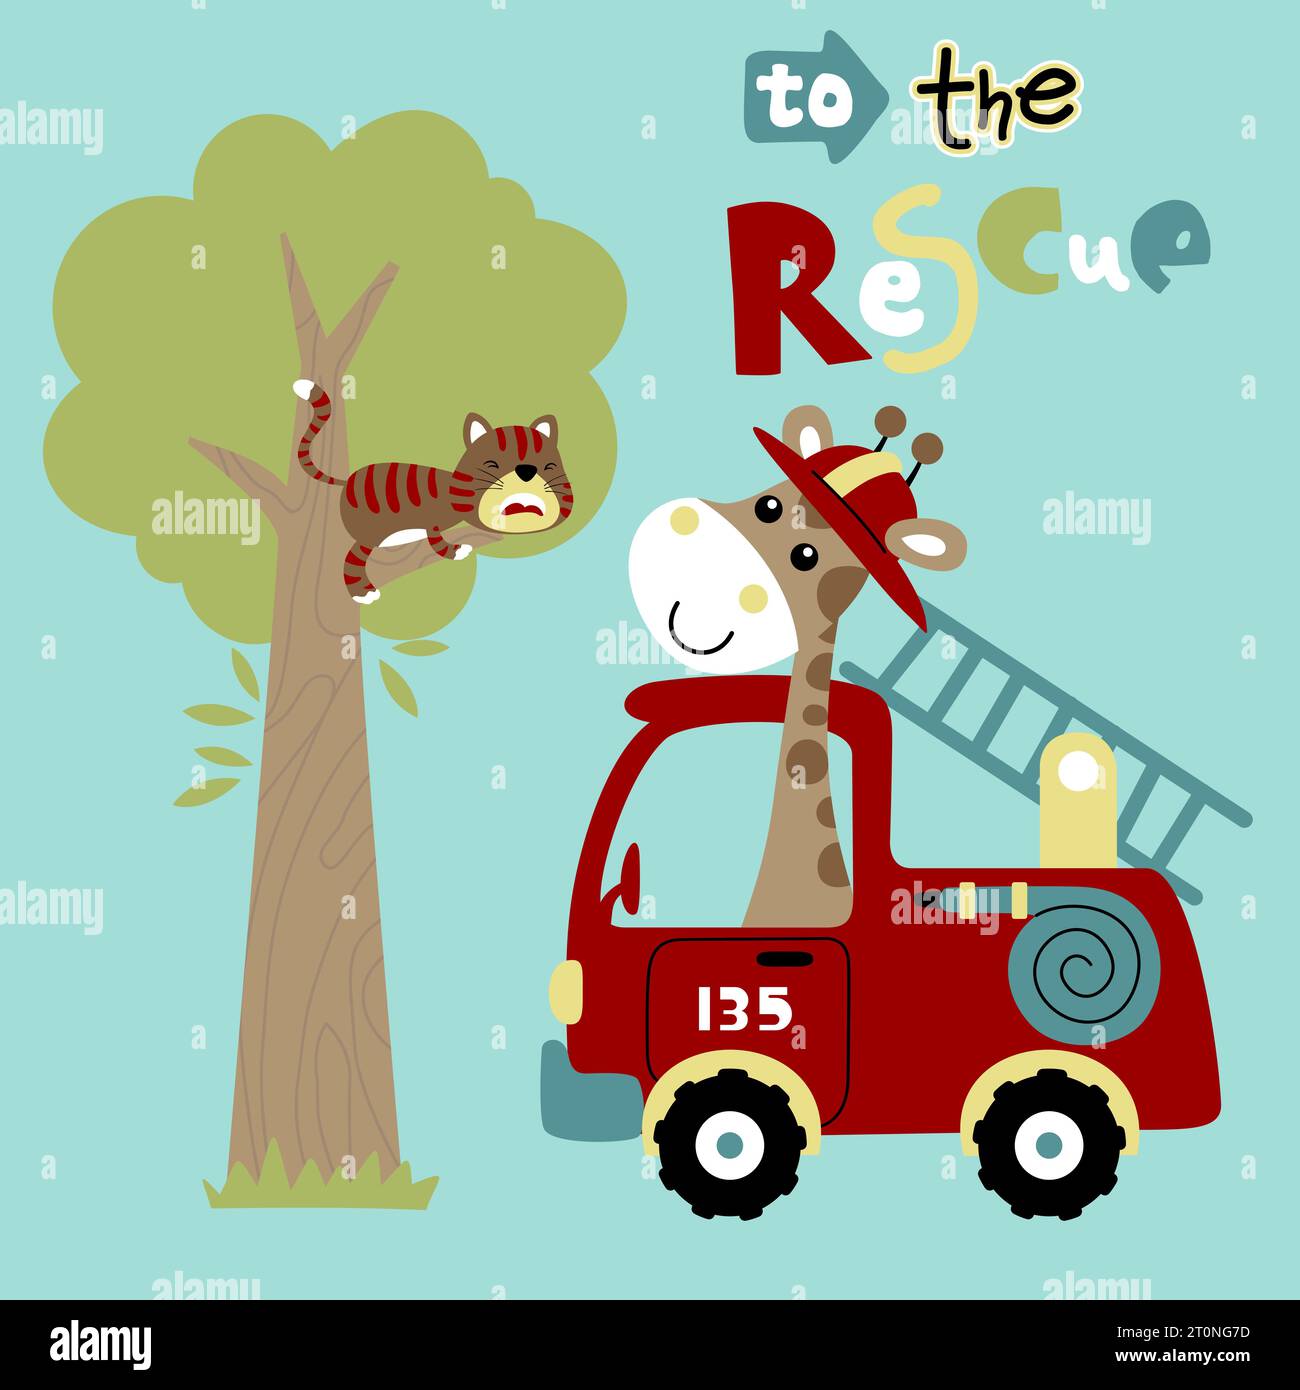 Cute giraffe on firetruck save the cat on tree, vector cartoon illustration Stock Vector